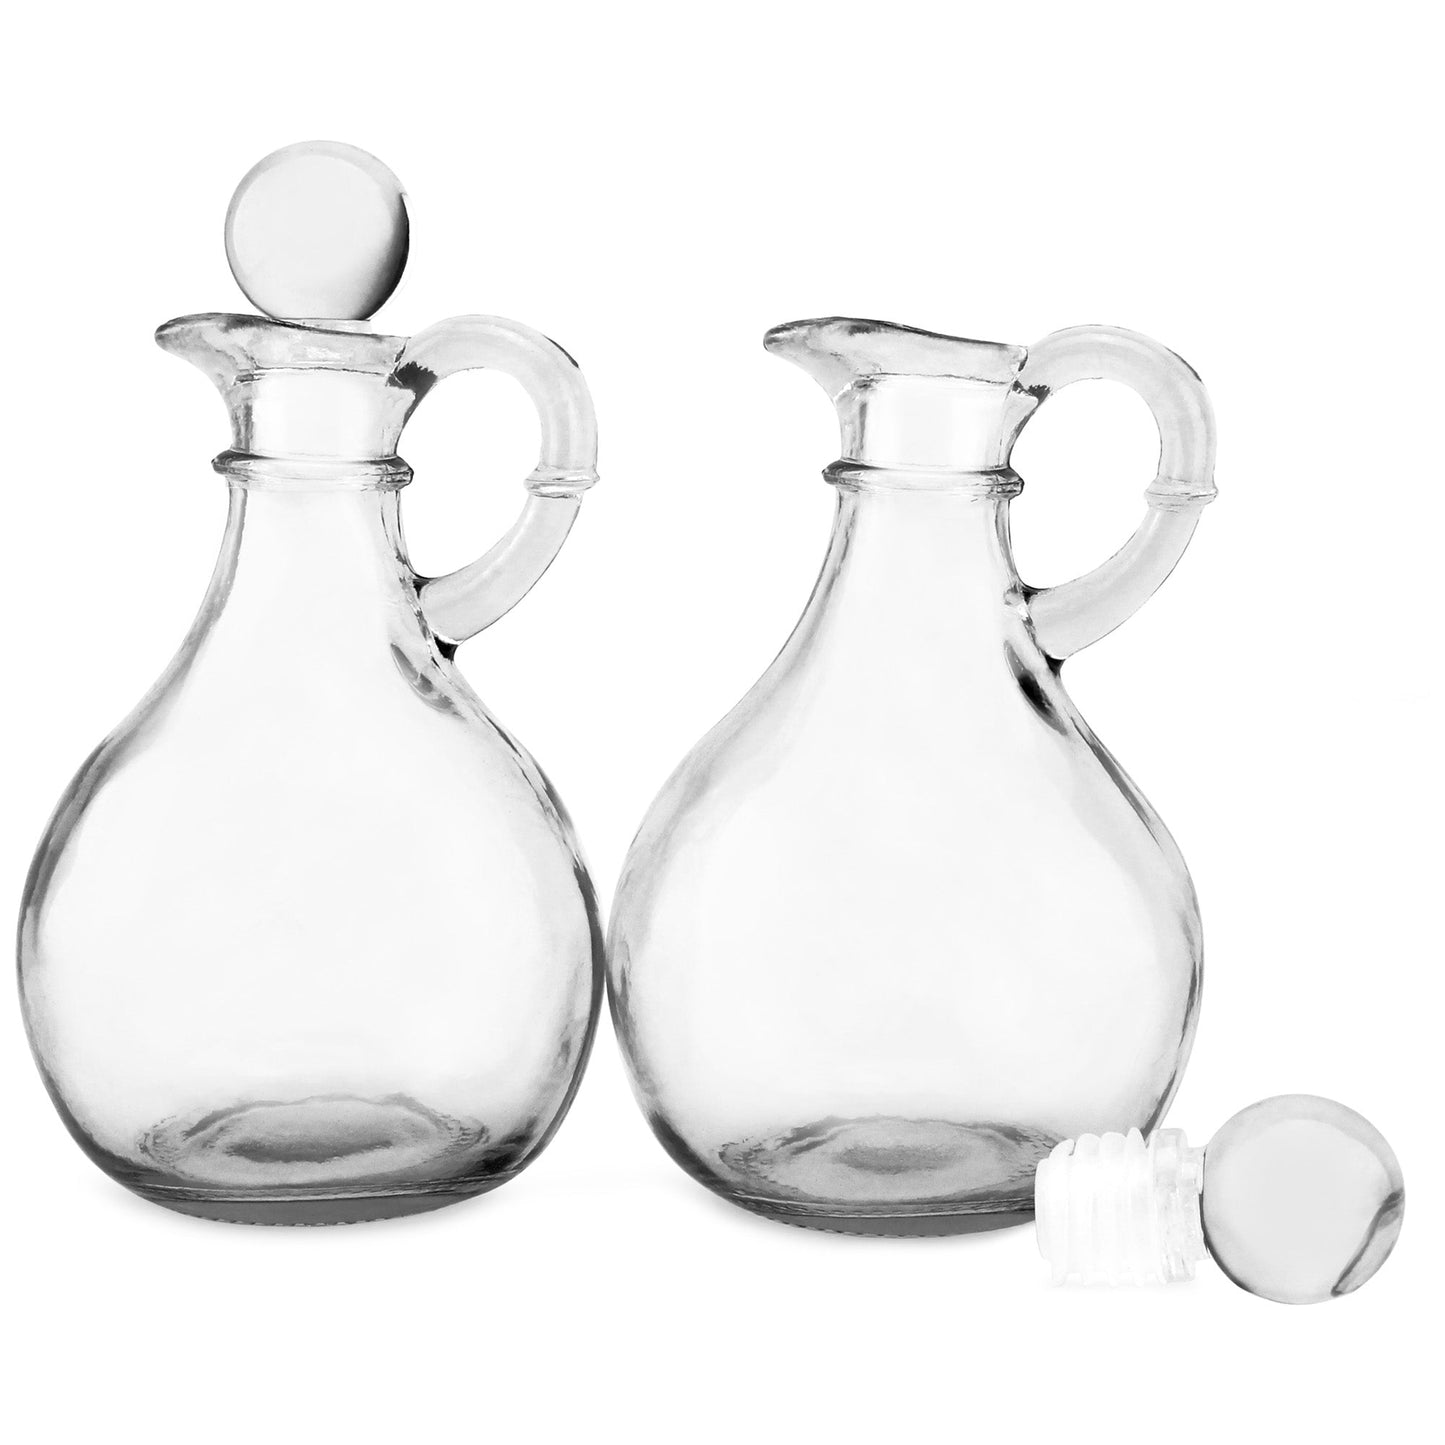 Glass Oil and Vinegar Cruets (Set of 2) - sh1546cb0Cruet